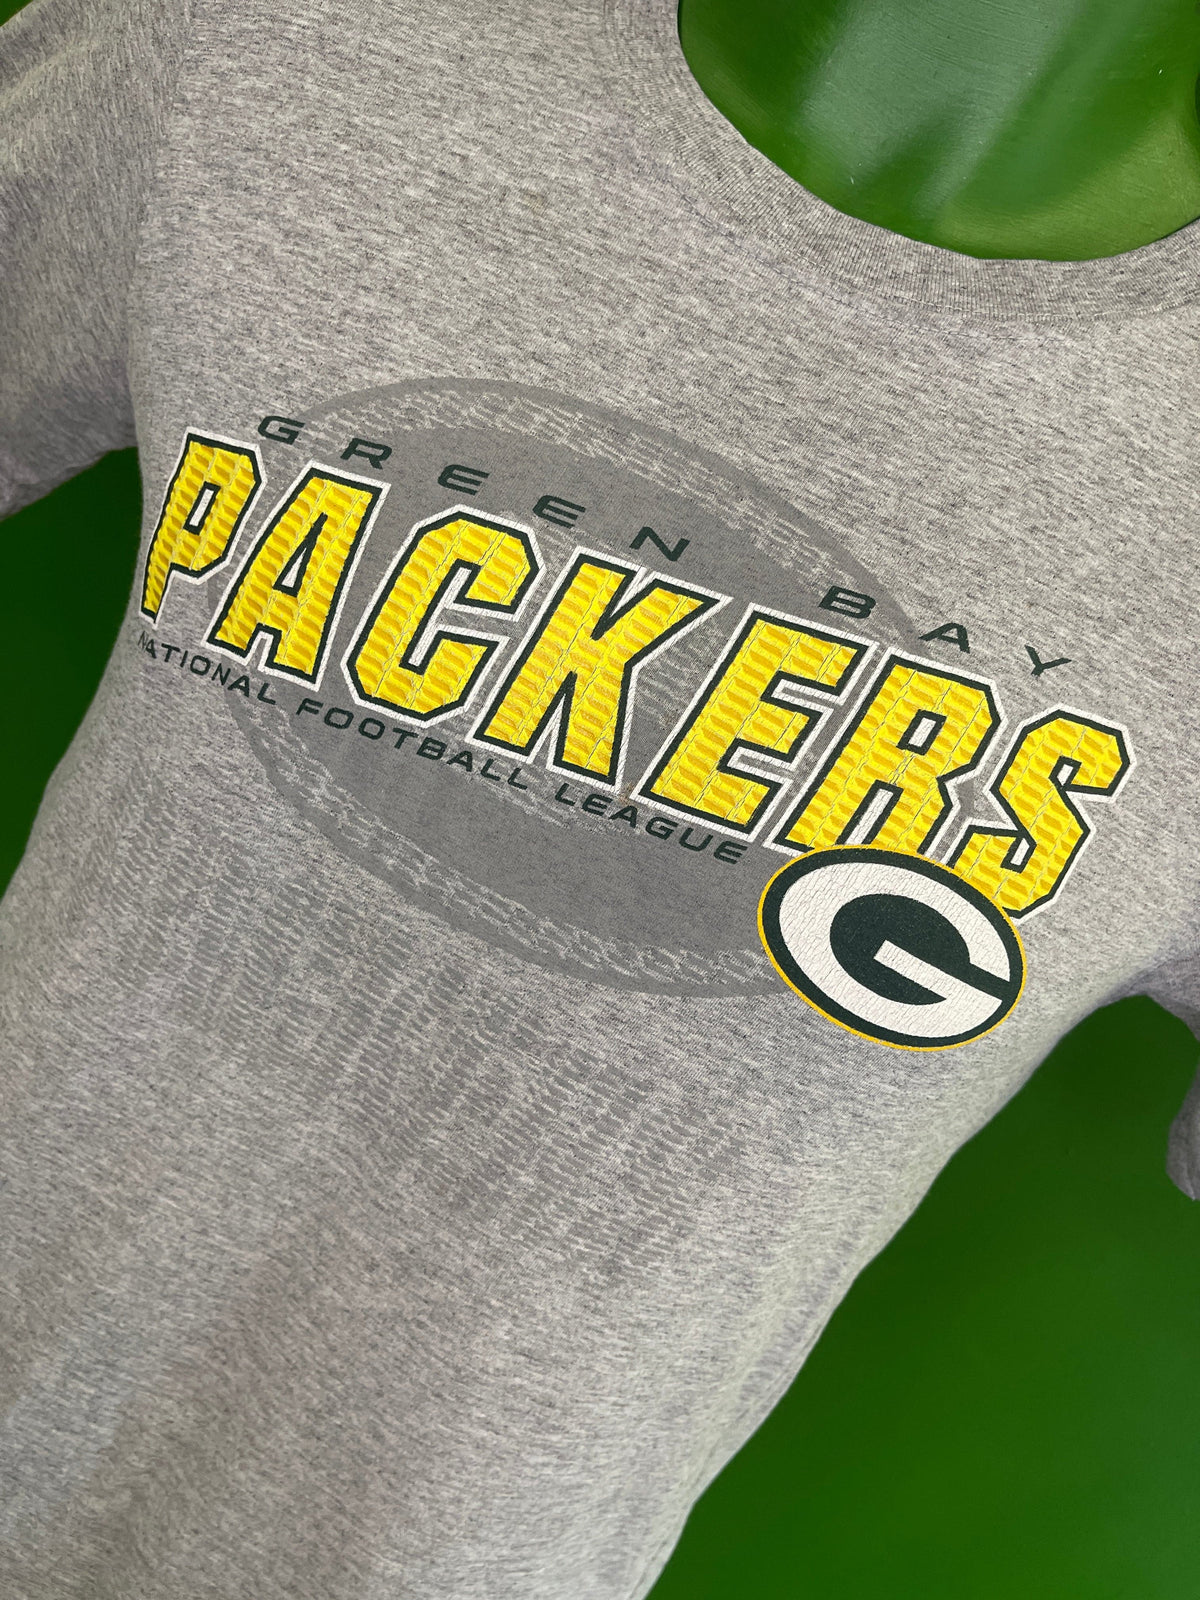 NFL Green Bay Packers Heathered Grey T-Shirt Youth Medium 10-12